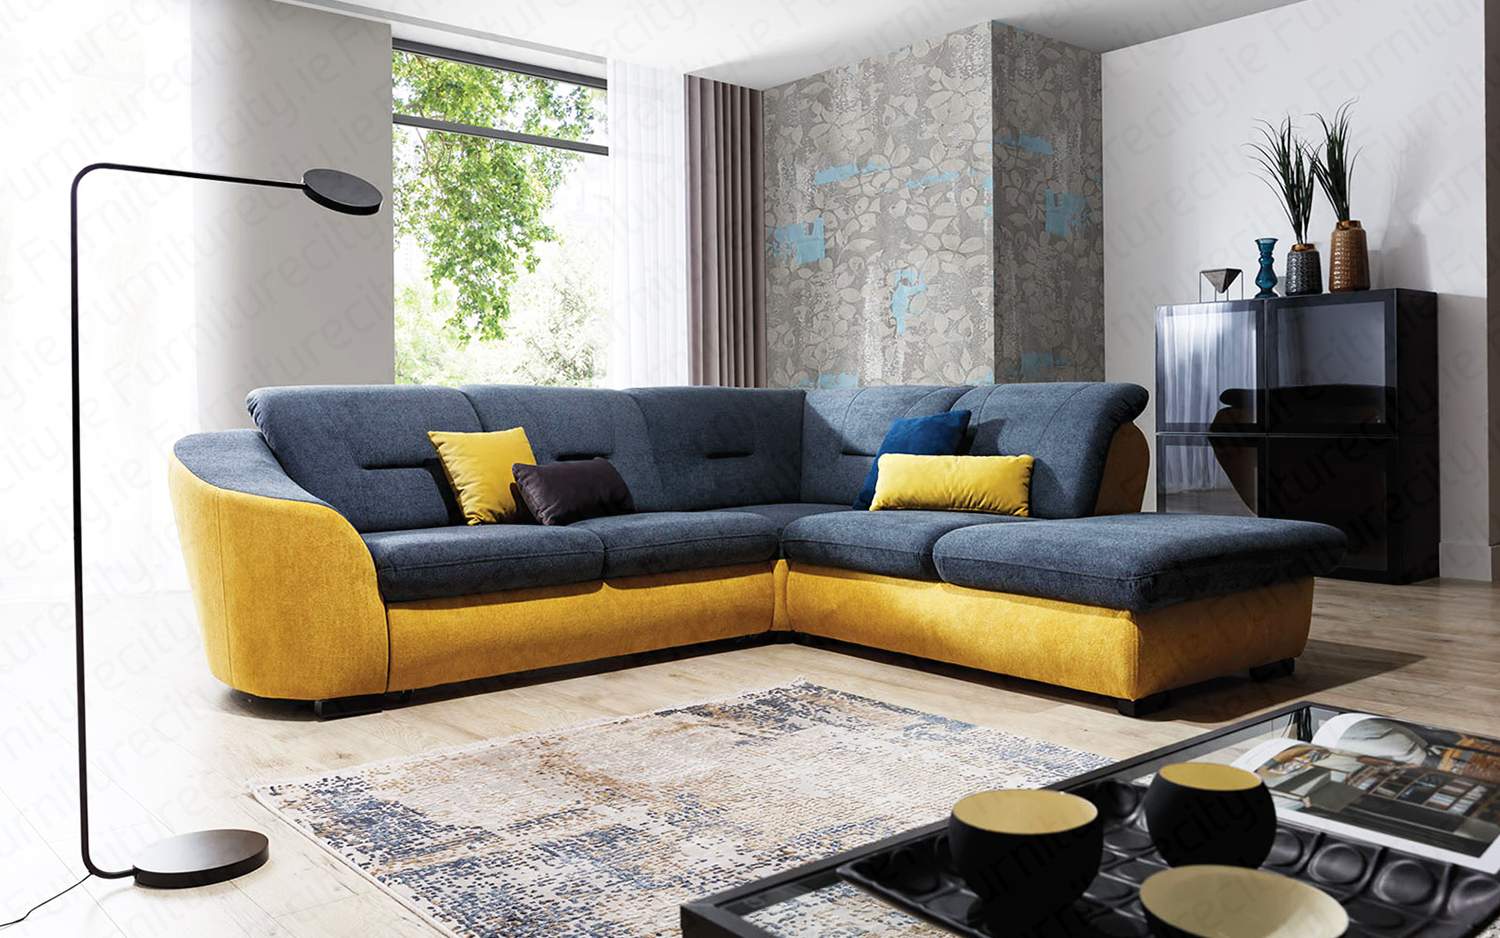 Sofa bed VESTO OPEN by Furniturecity.ie